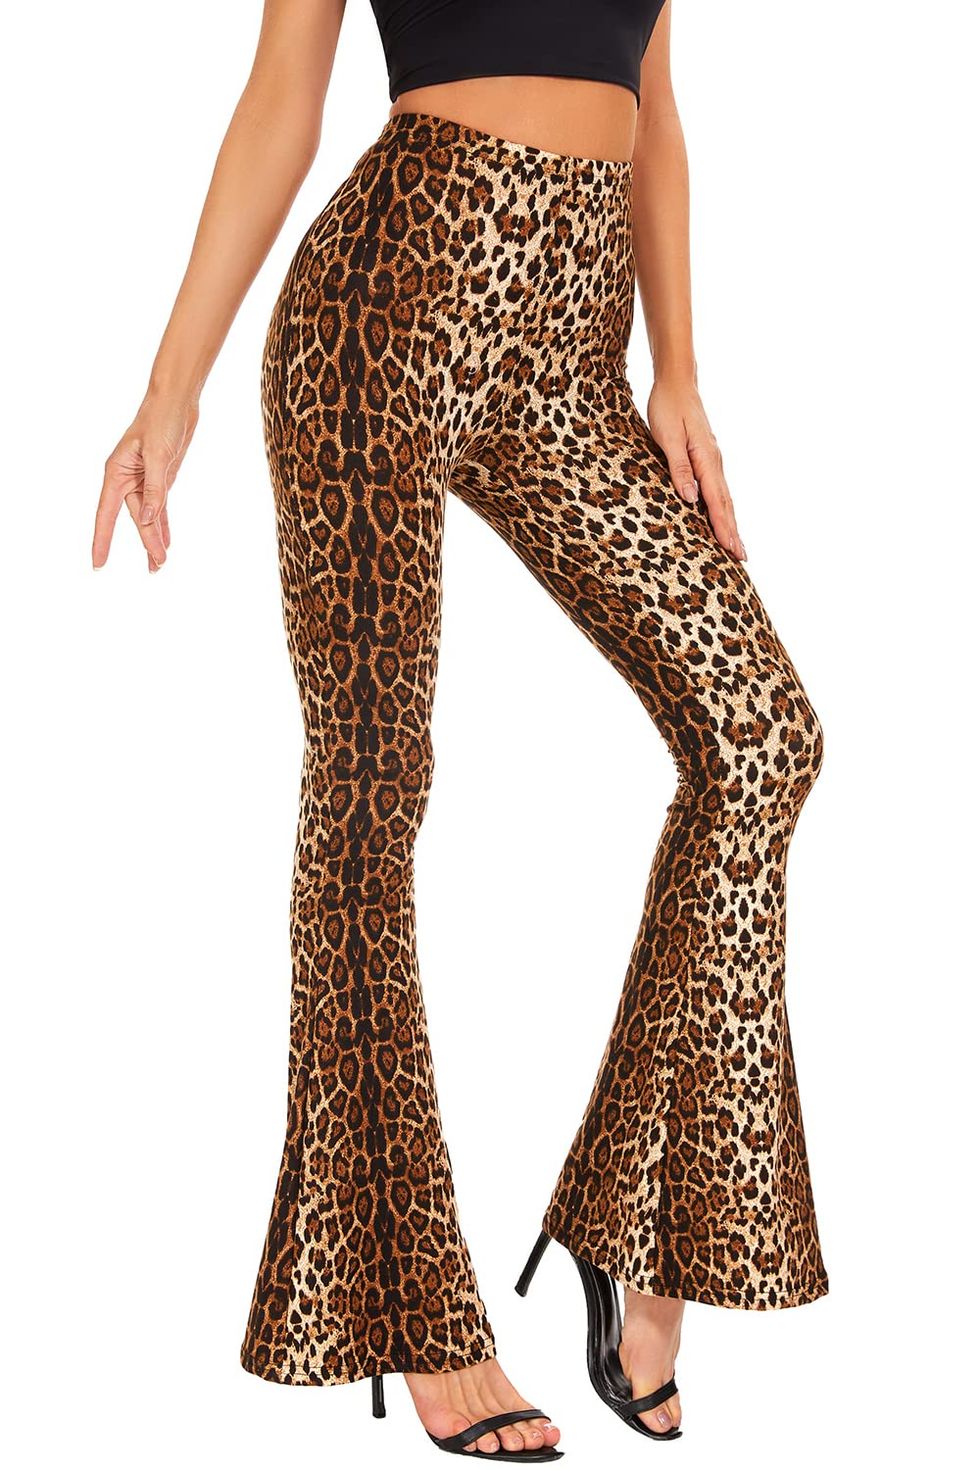 Long Live Leopard Bells  Bell bottom pants, Bell bottoms, Western wear for  women